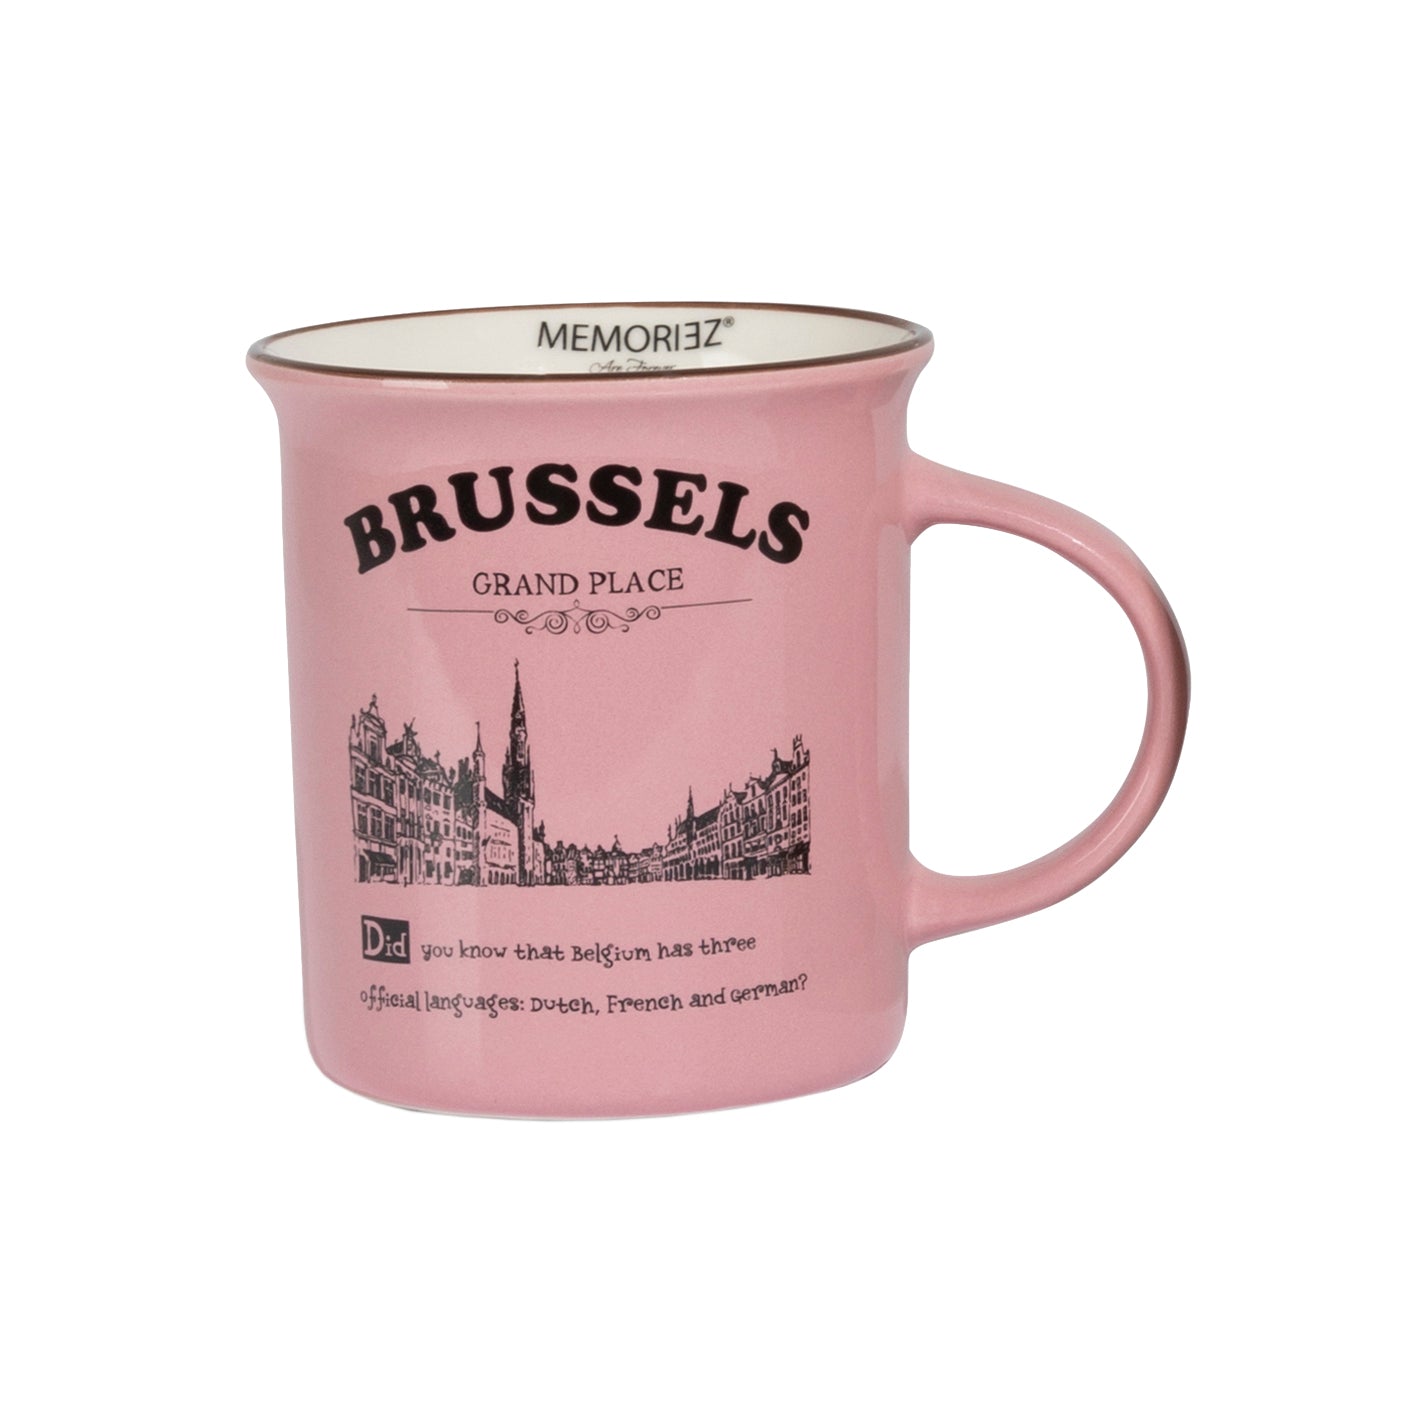 Story mug large - Brussels - Grand place